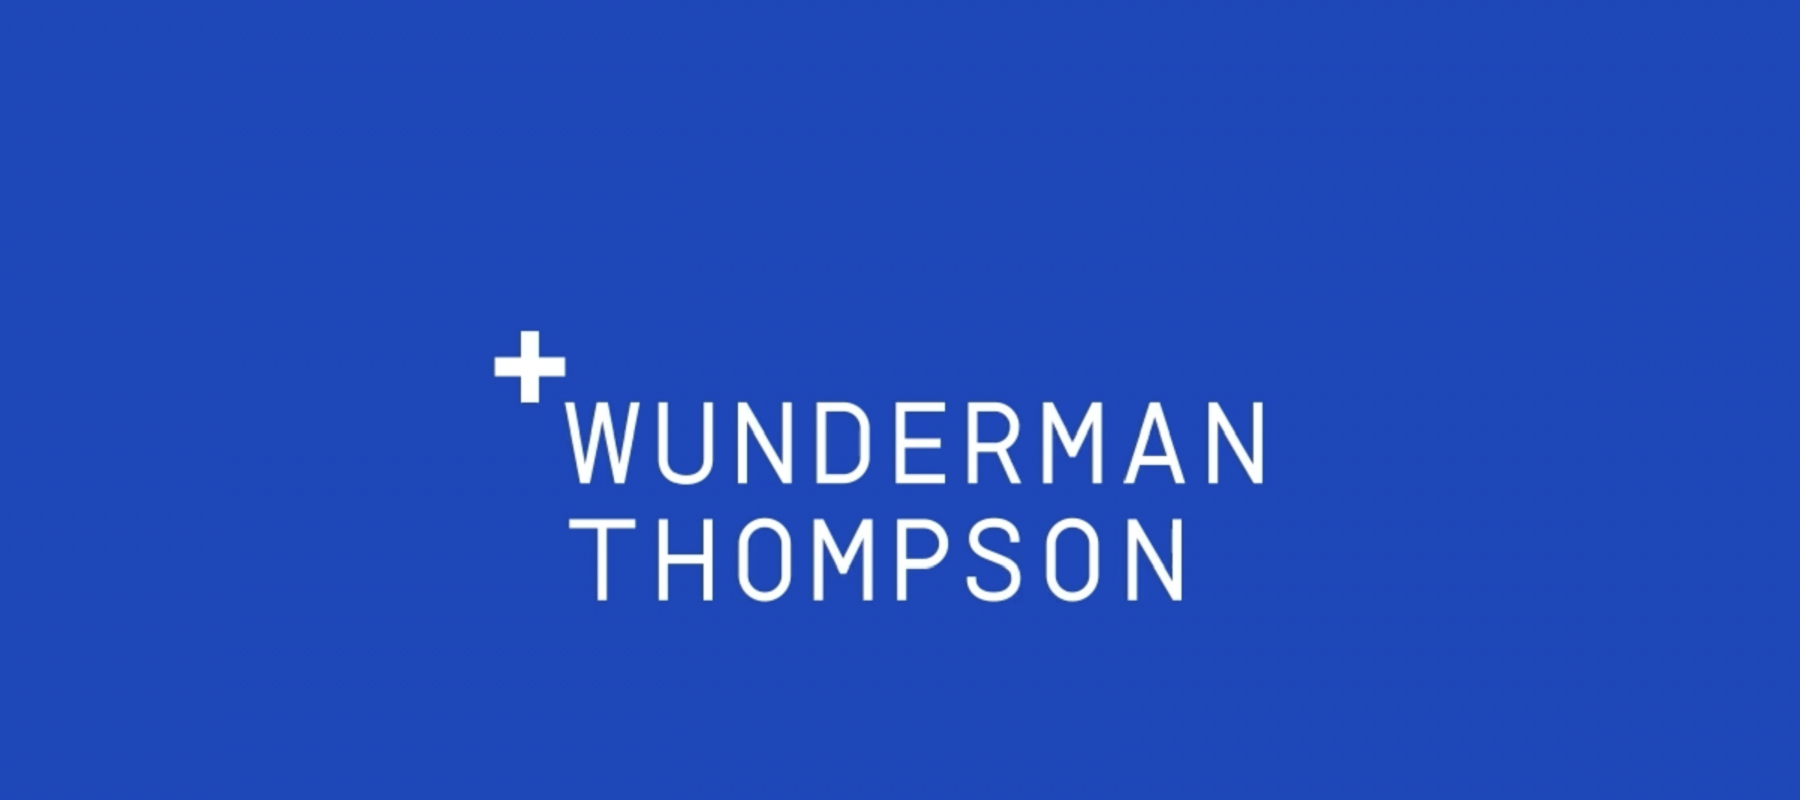 Körber Pharma appoints Wunderman Thompson to lead its global marketing communications